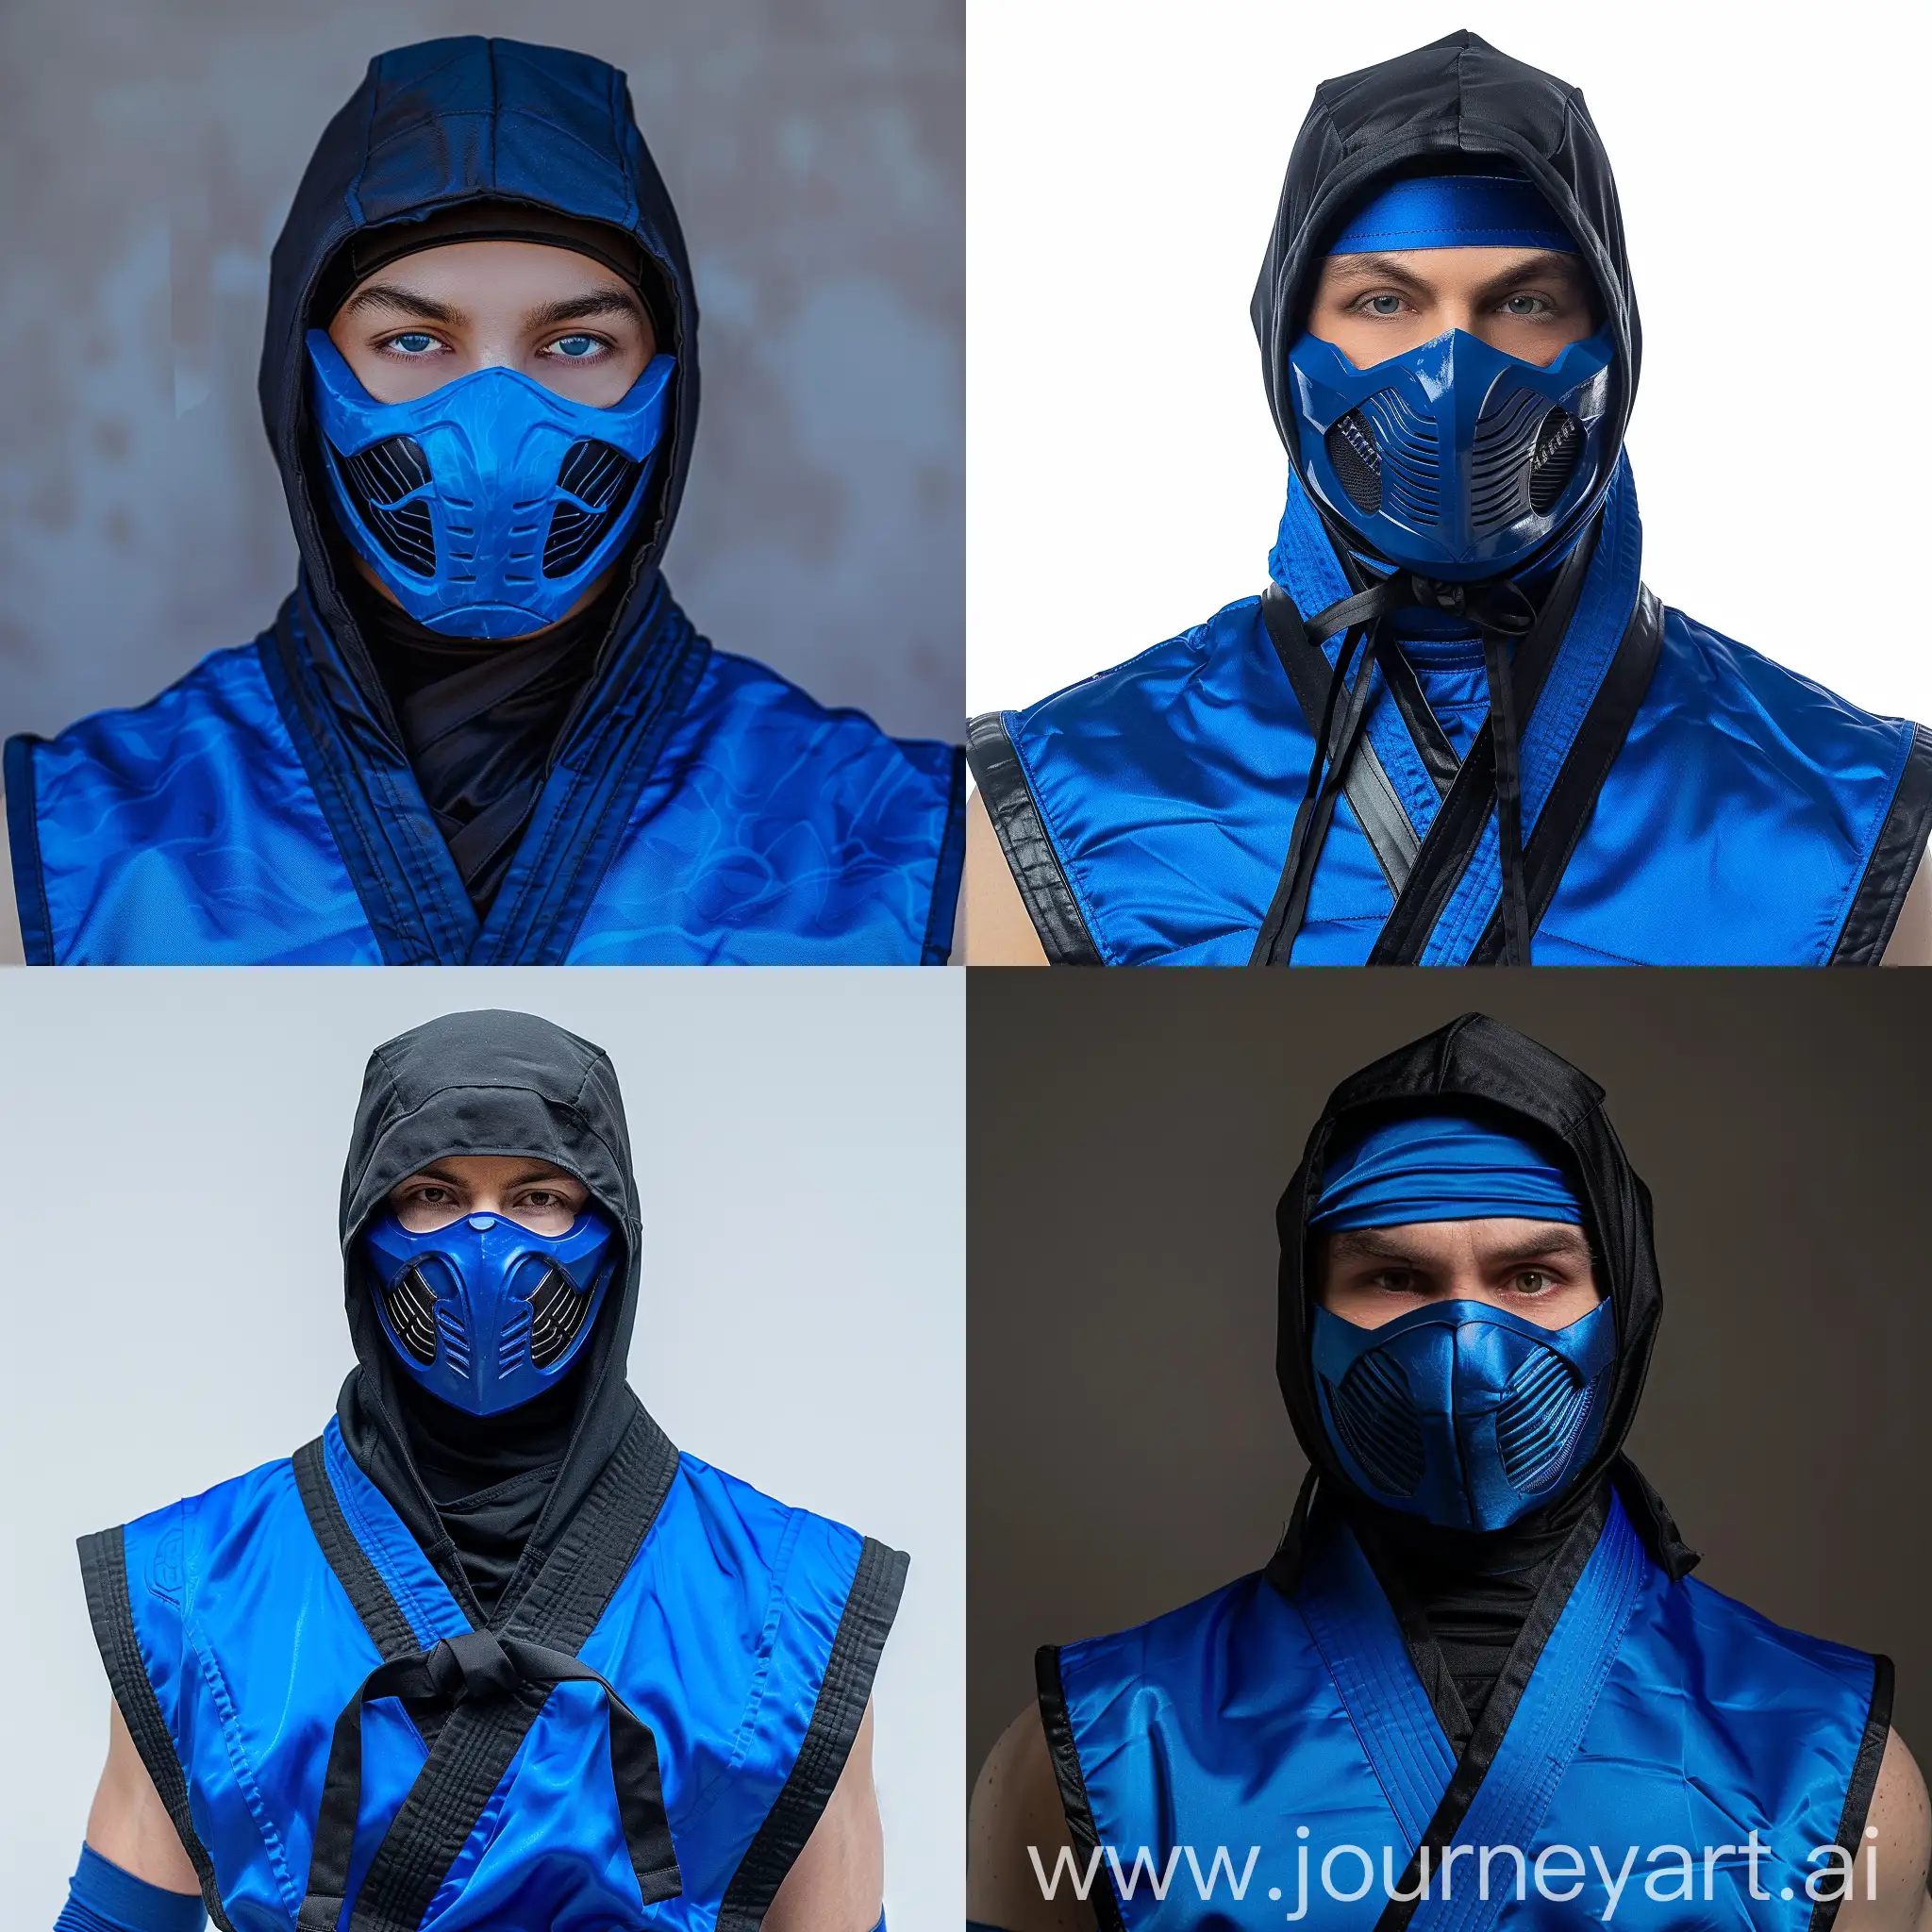 Sub-Zero from Mortal Kombat 1, blue ninja costume, blue mask, black hood